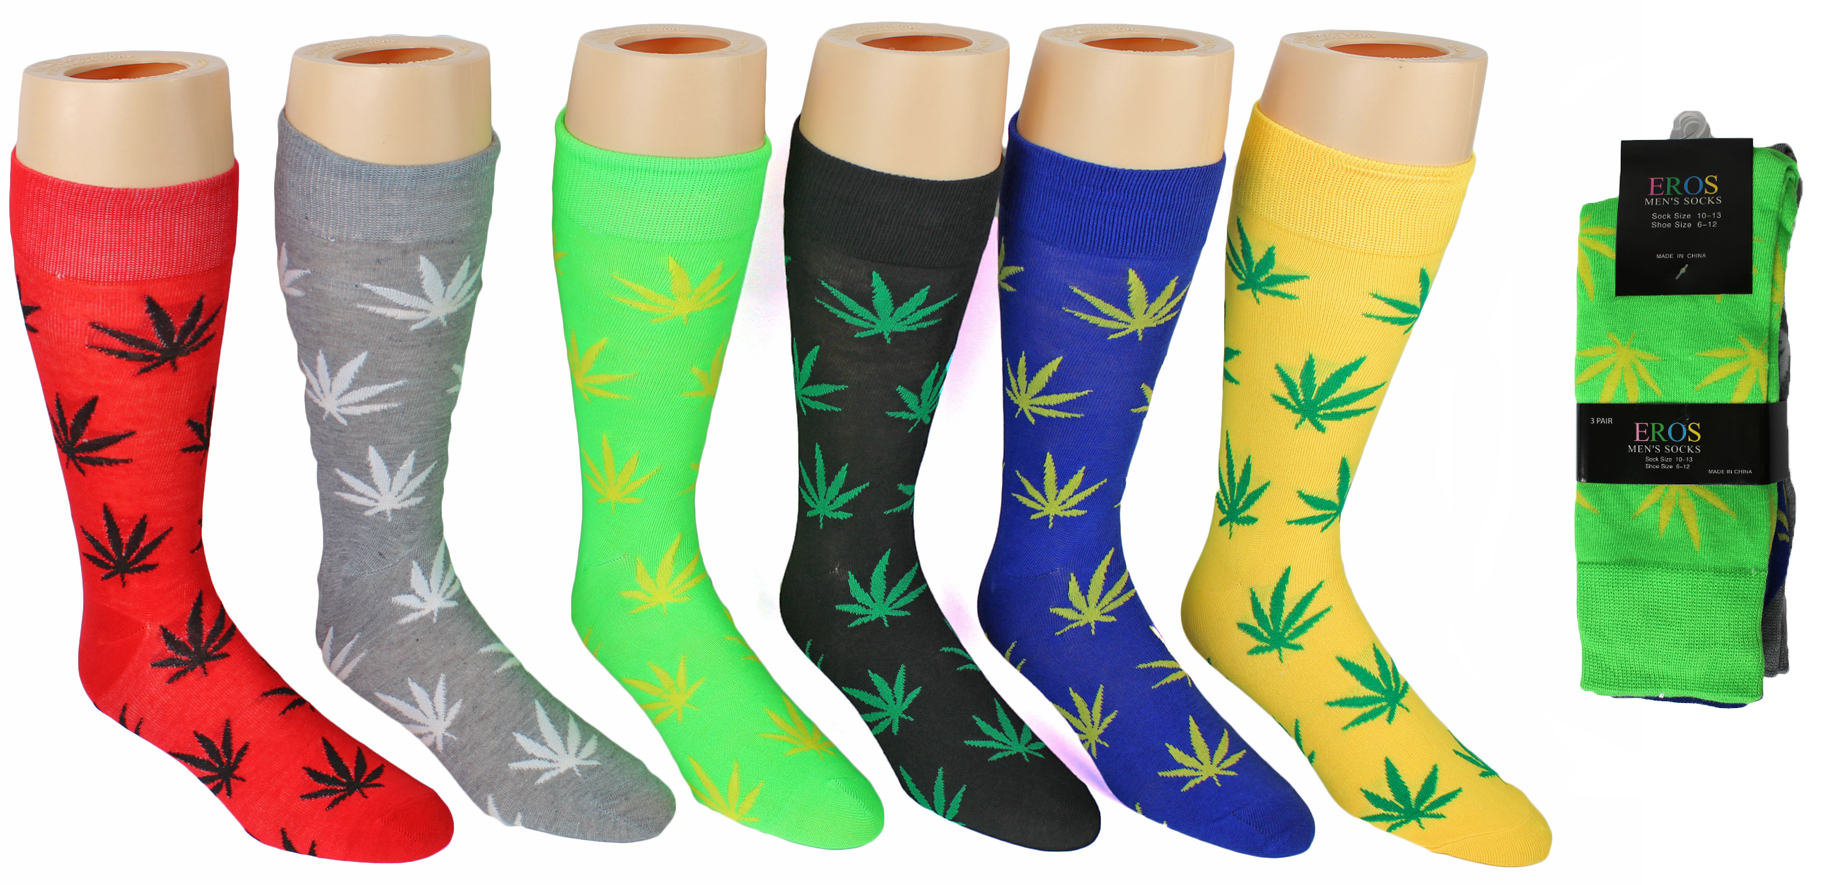 Men's Casual Crew DRESS Socks - Marijuana Leaf Print - Size 10-13